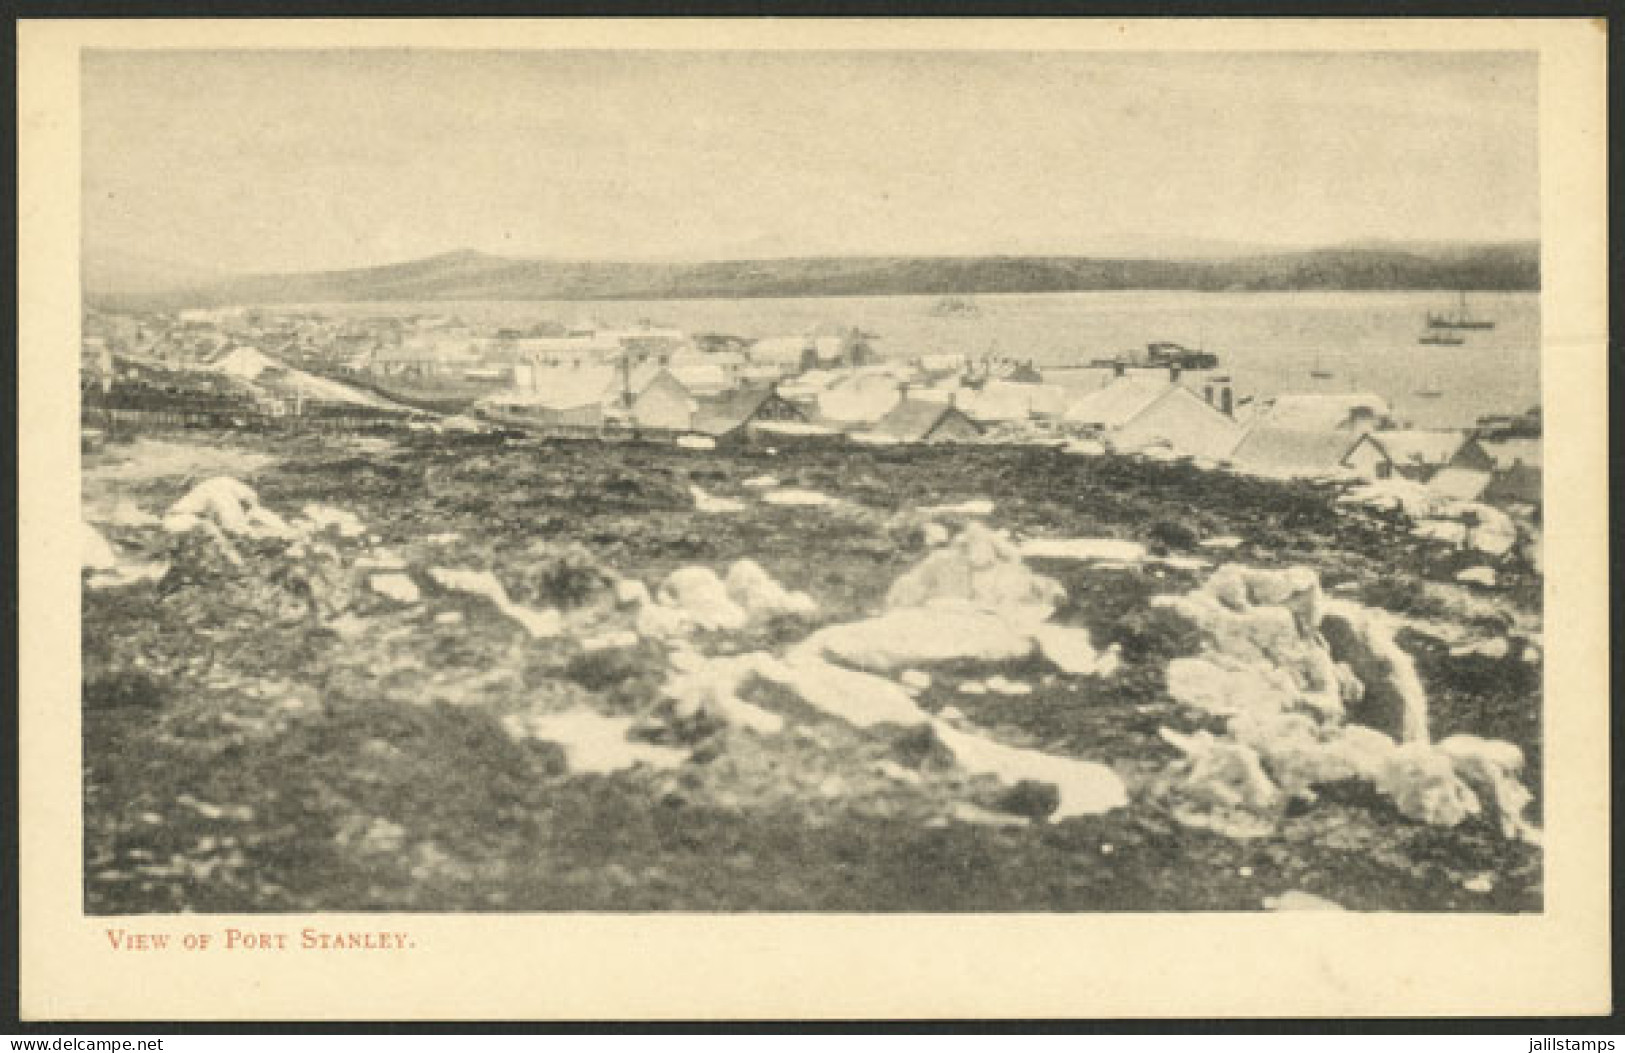 FALKLAND ISLANDS/MALVINAS: PORT STANLEY: General View, Old Unused Postcard, Very Fine Quality! - Falkland